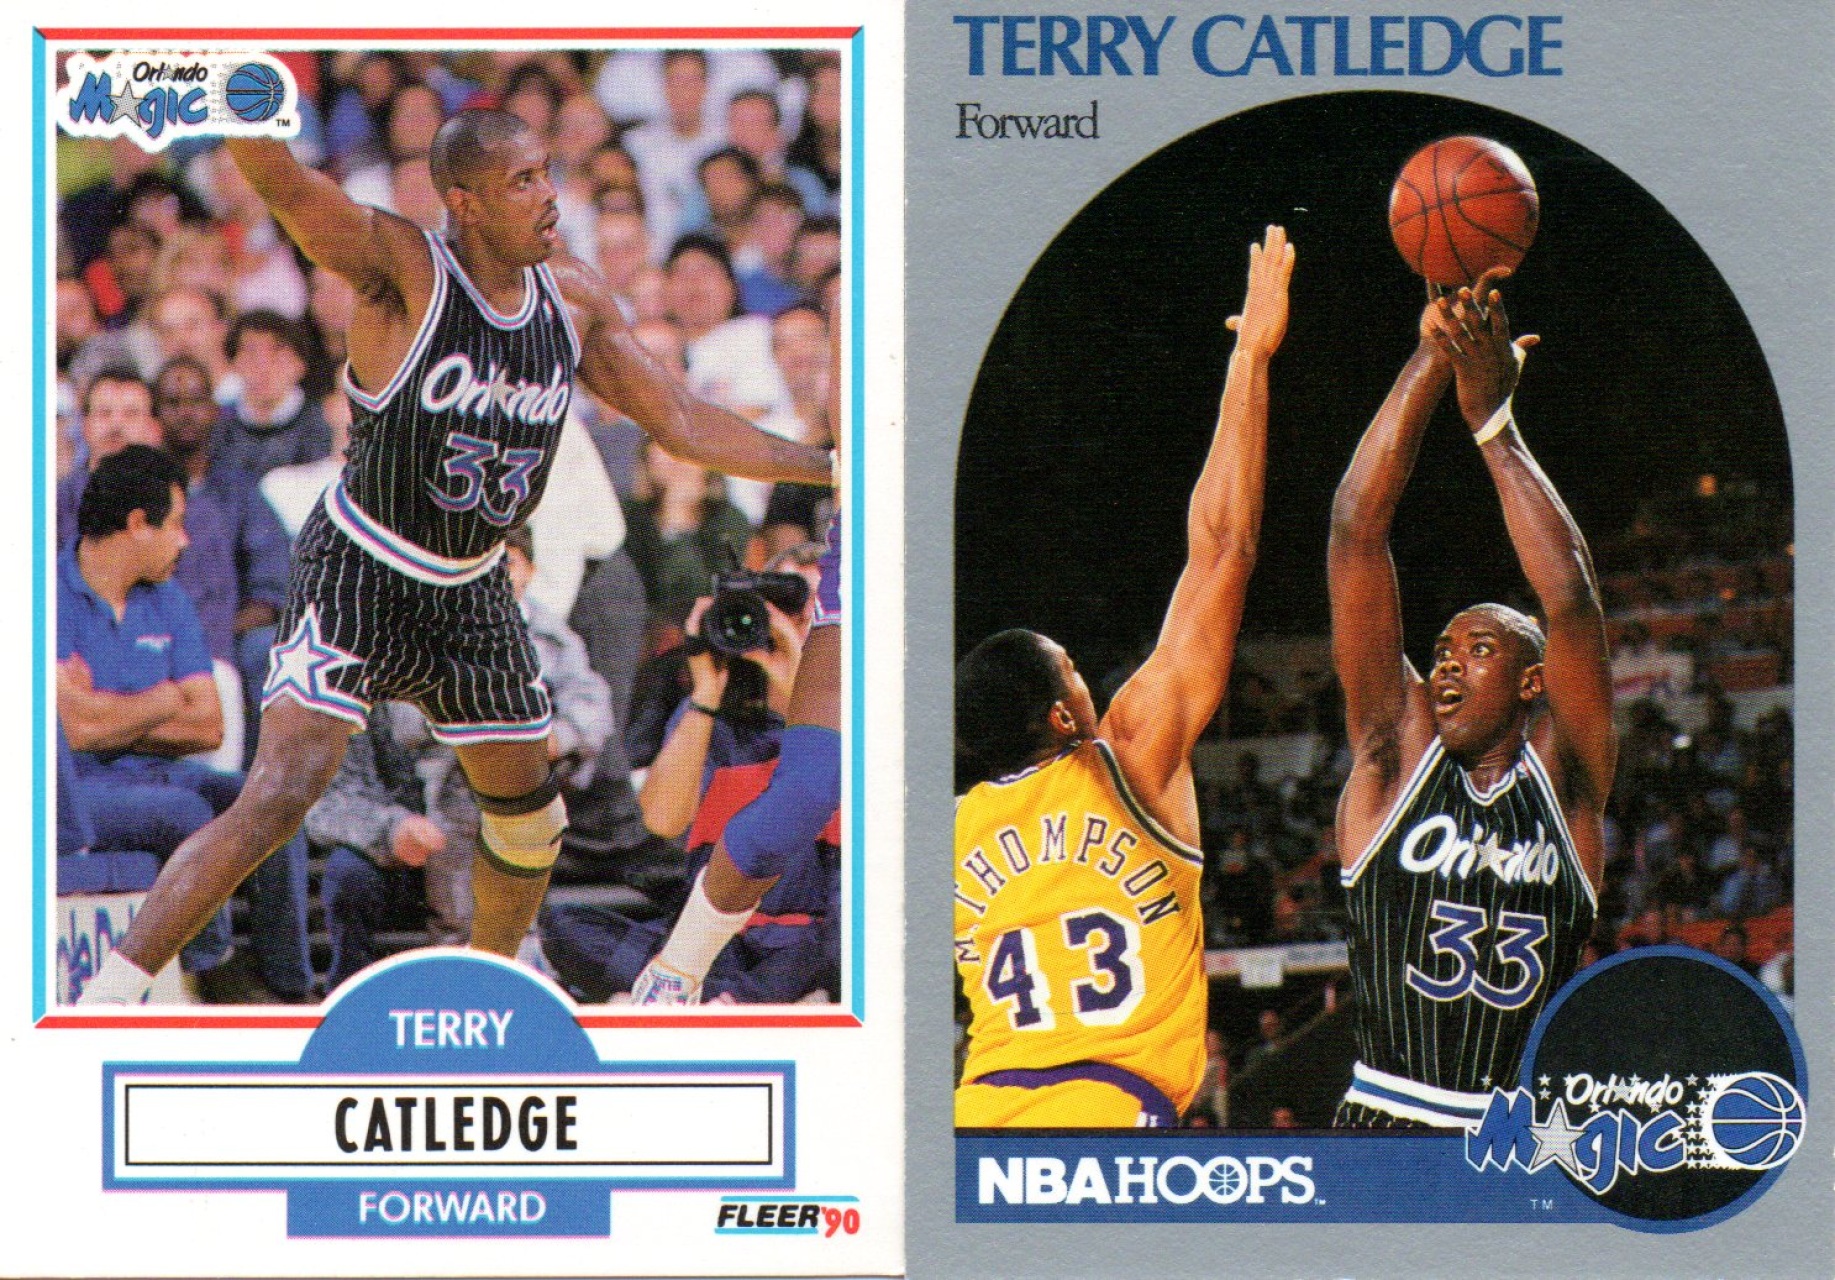  1991-92 SkyBox Basketball #504 Dennis Scott Orlando Magic RS  Official NBA Trading Card : Collectibles & Fine Art